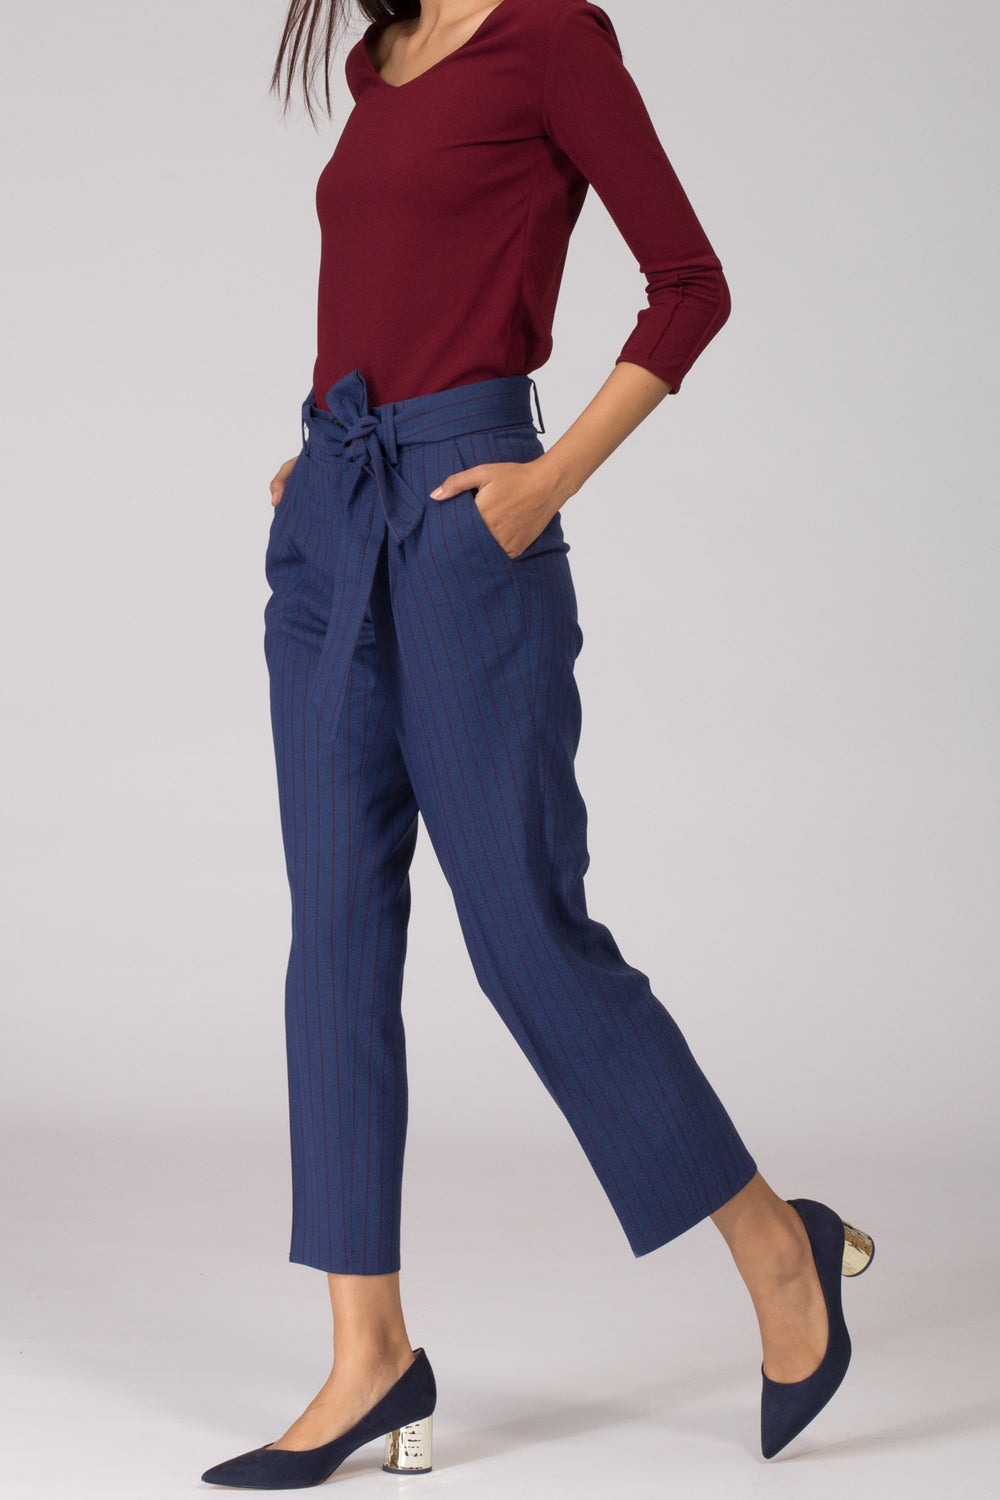 Womens lightweight wool work dress pants lined in custom-made fashion